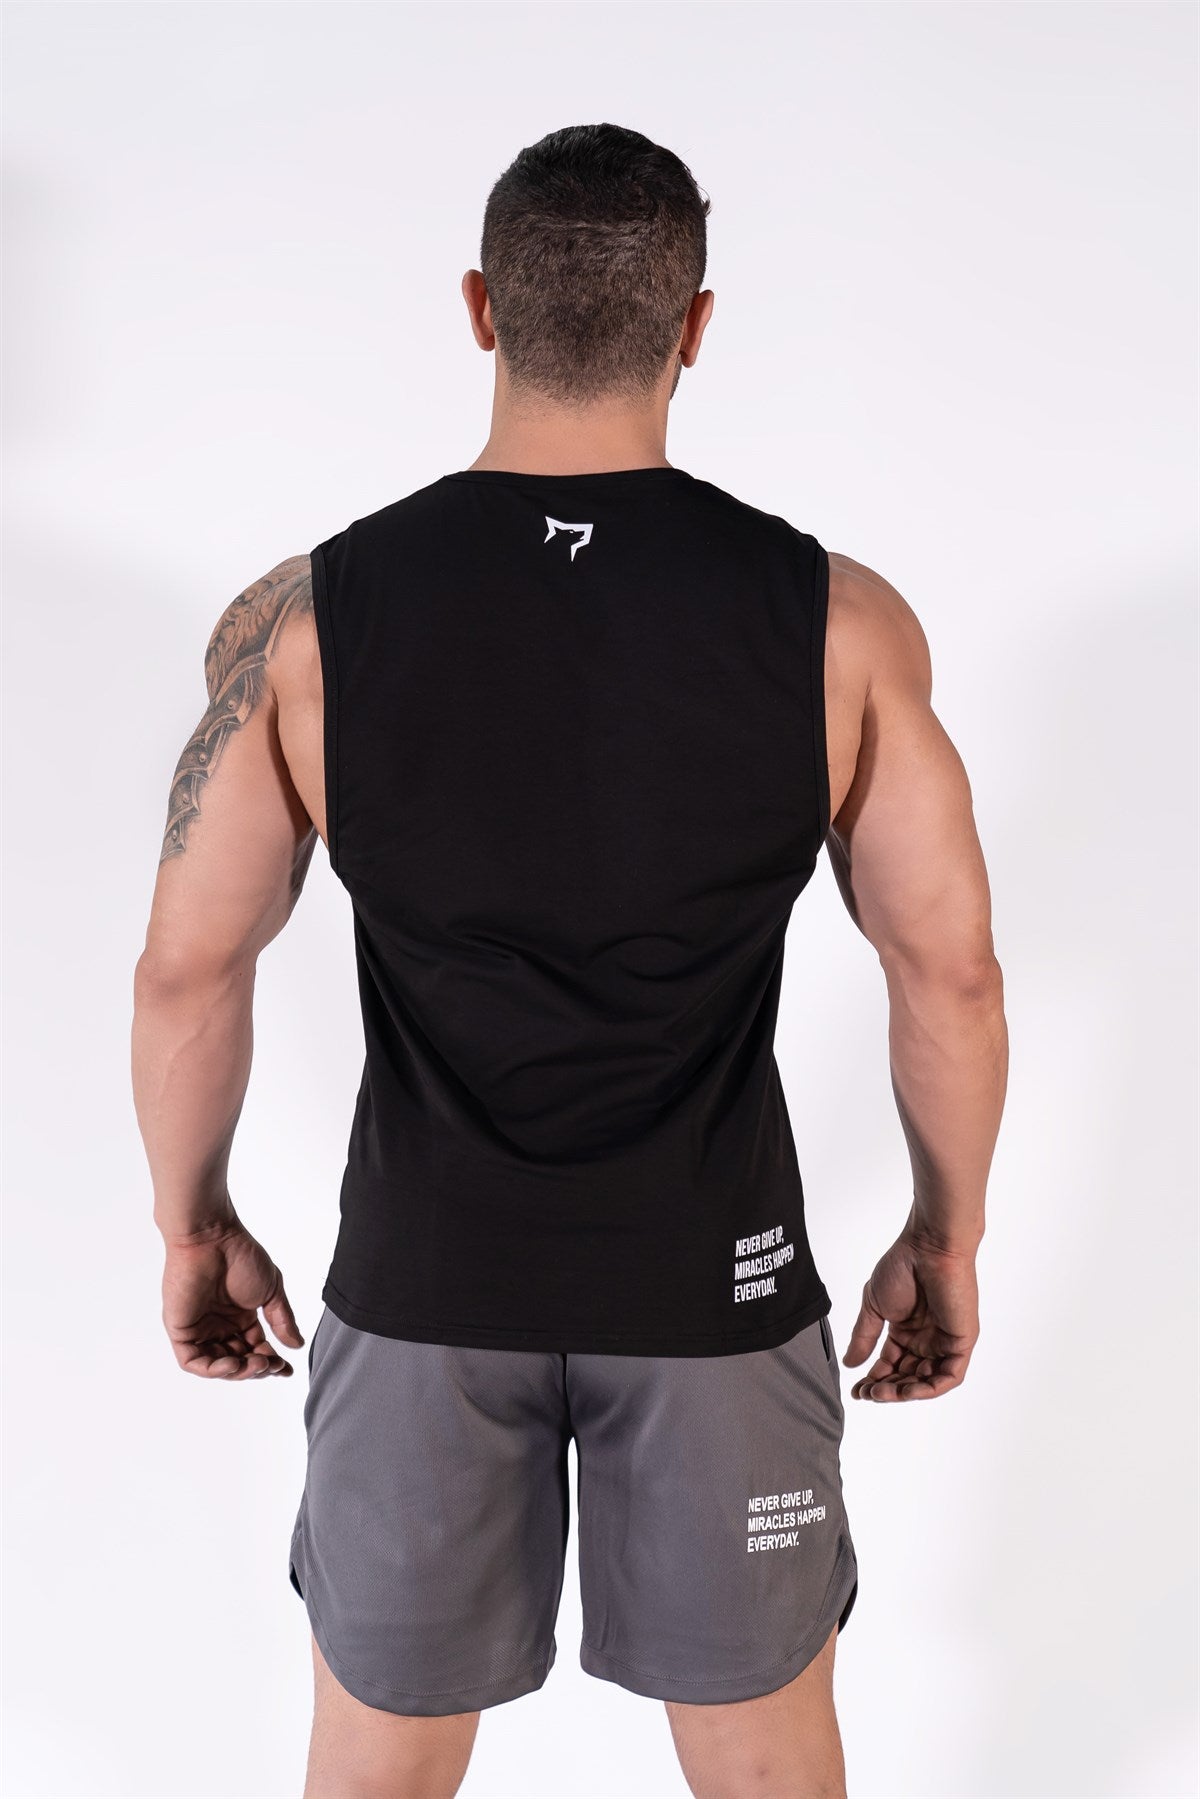 Gymwolves Men's Sleeveless T-Shirt | Men's Sports T-Shirt | Workout Tank Top | Noir - Shakeproteine